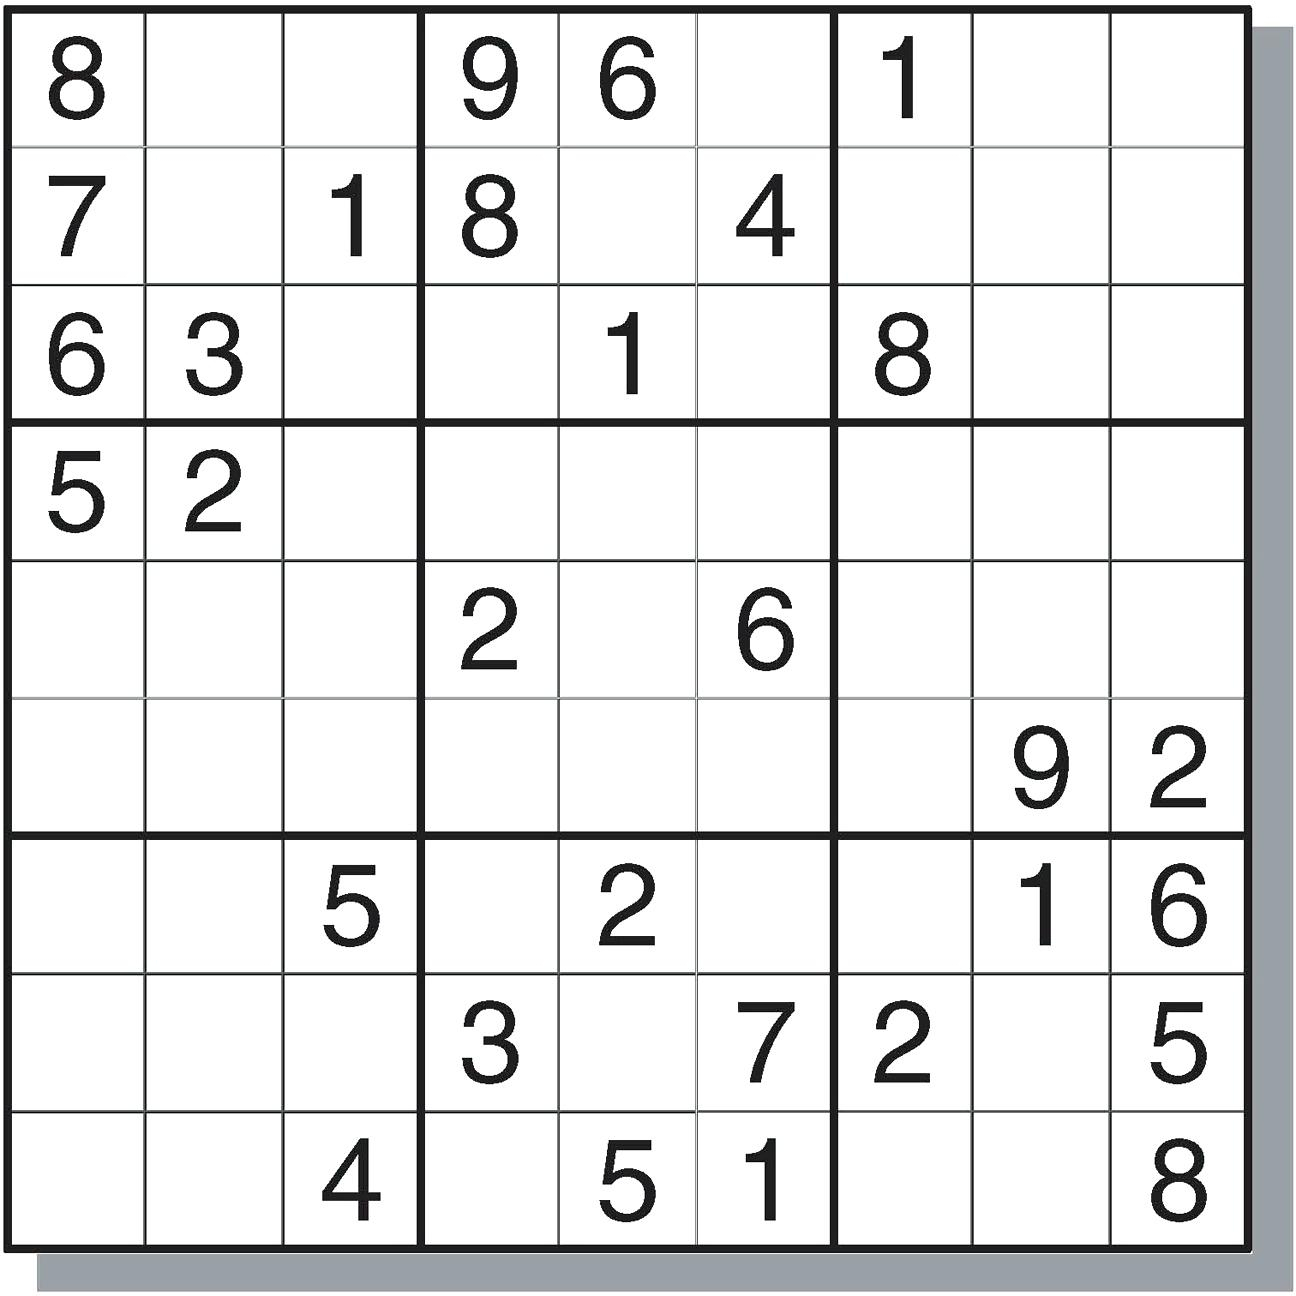 Worksheet : Easy Sudoku Puzzles Printable Flvipymy Screenshoot On - Printable Sudoku Puzzles Uk